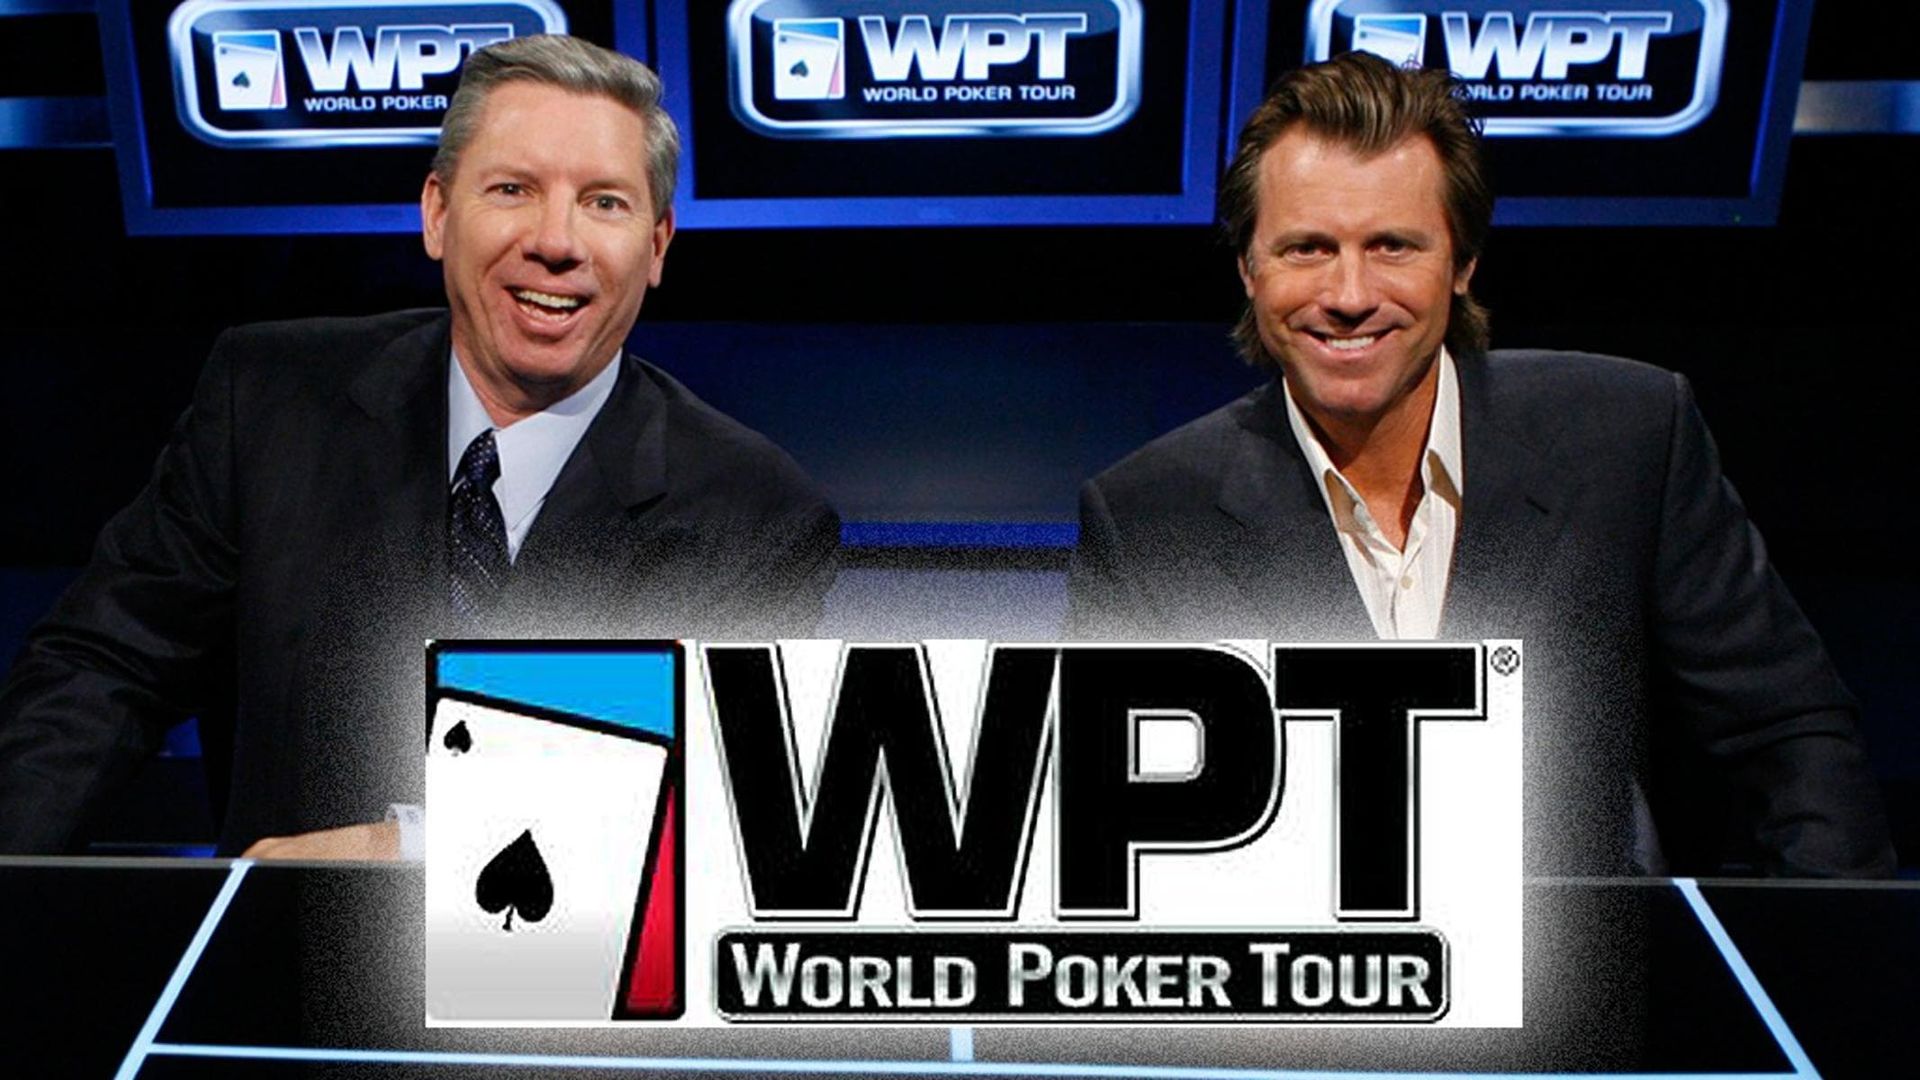 World Poker Tour background